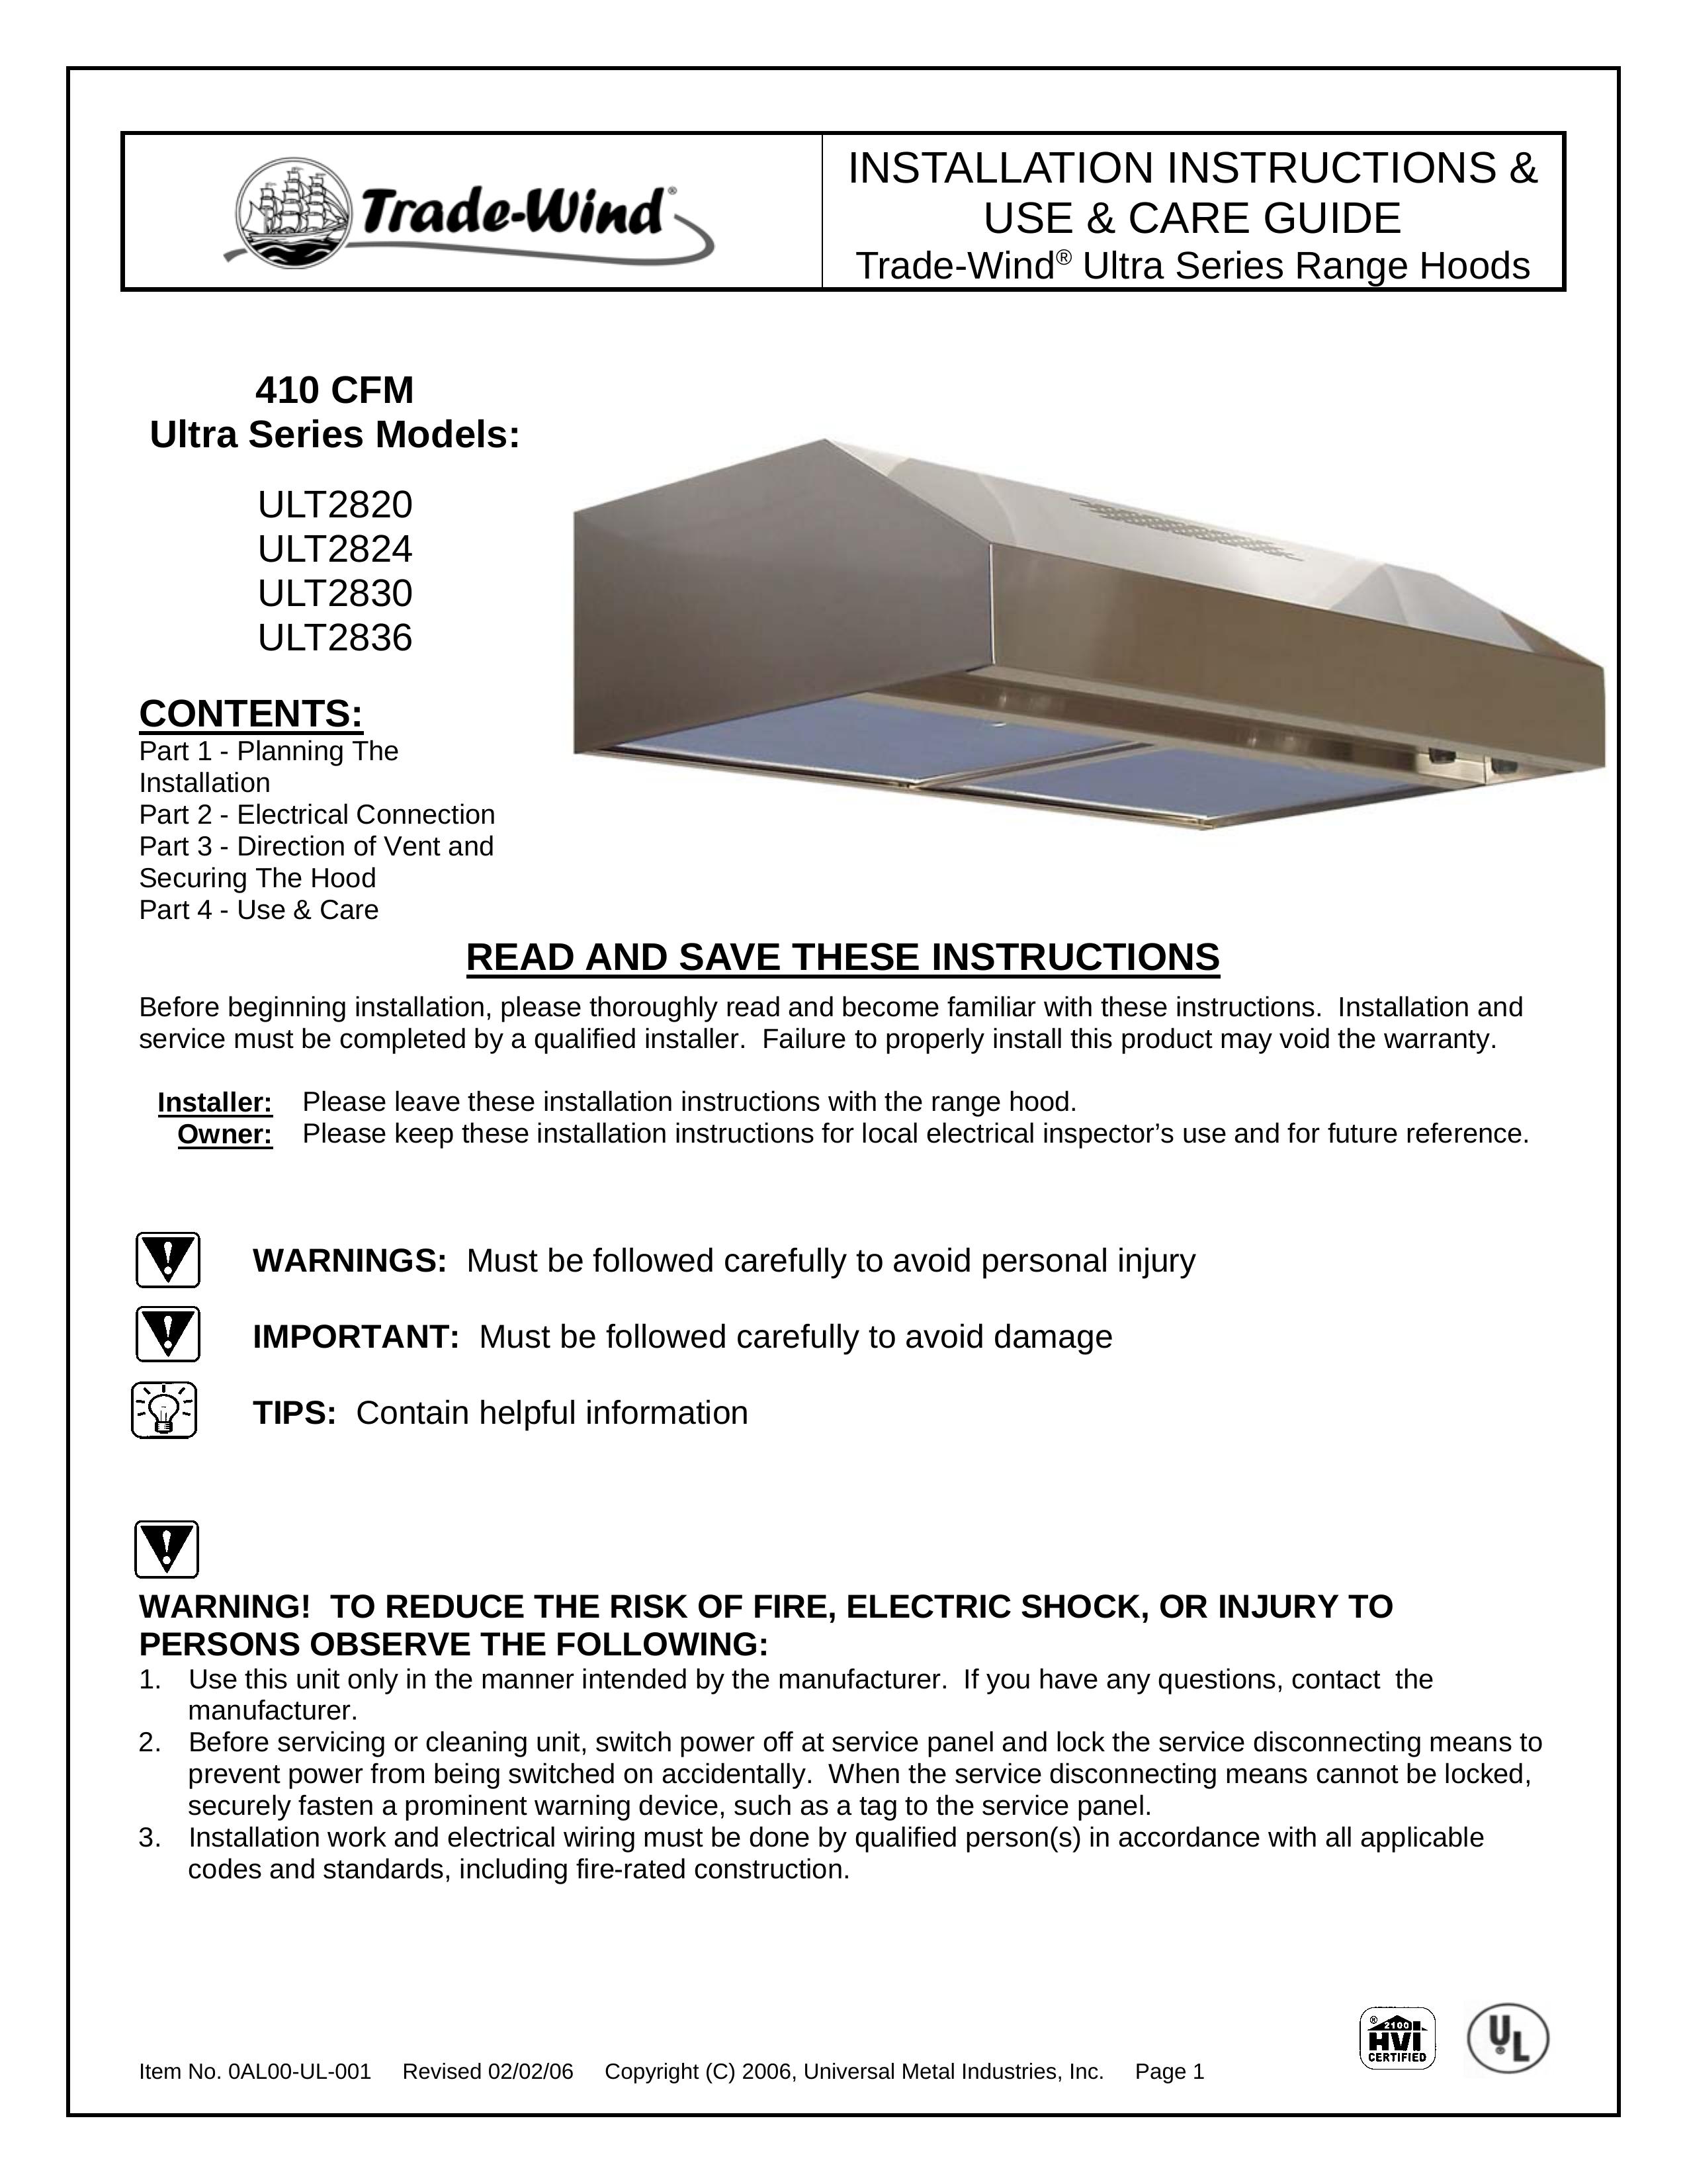 Universal Metal Industries ULT2836 Ventilation Hood User Manual